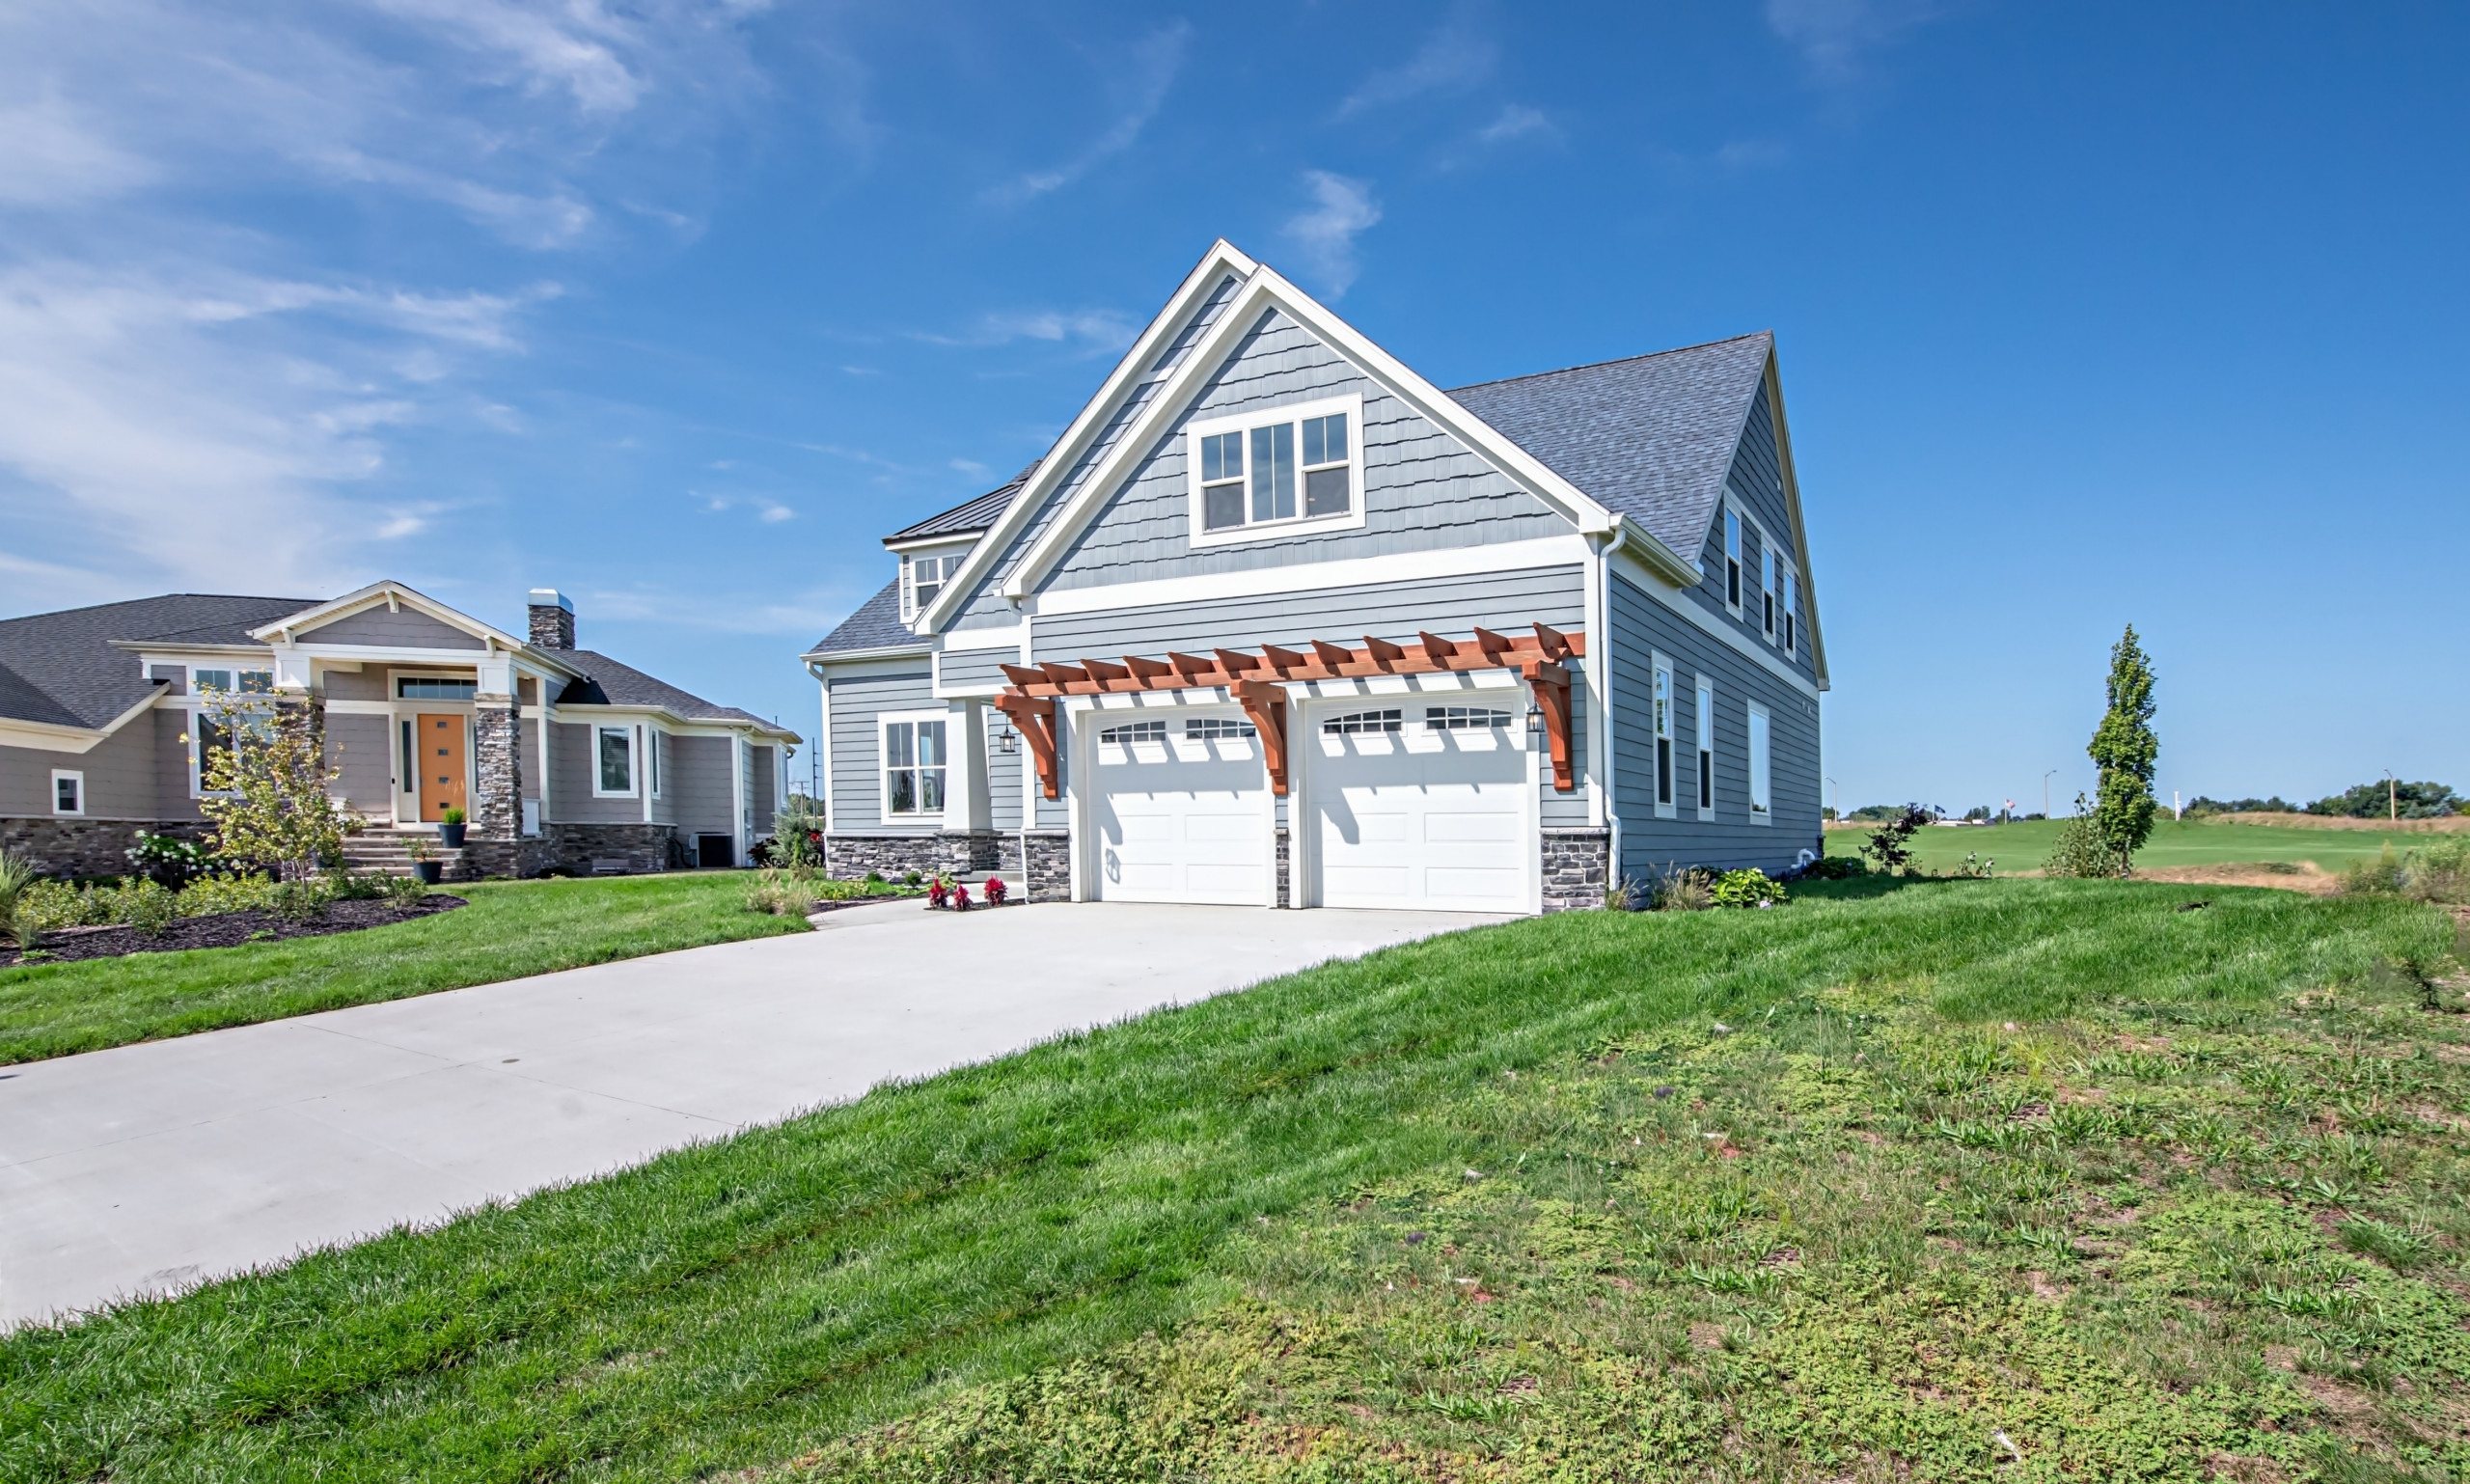 Custom-Built Home in the Fairways of Harbor Shores